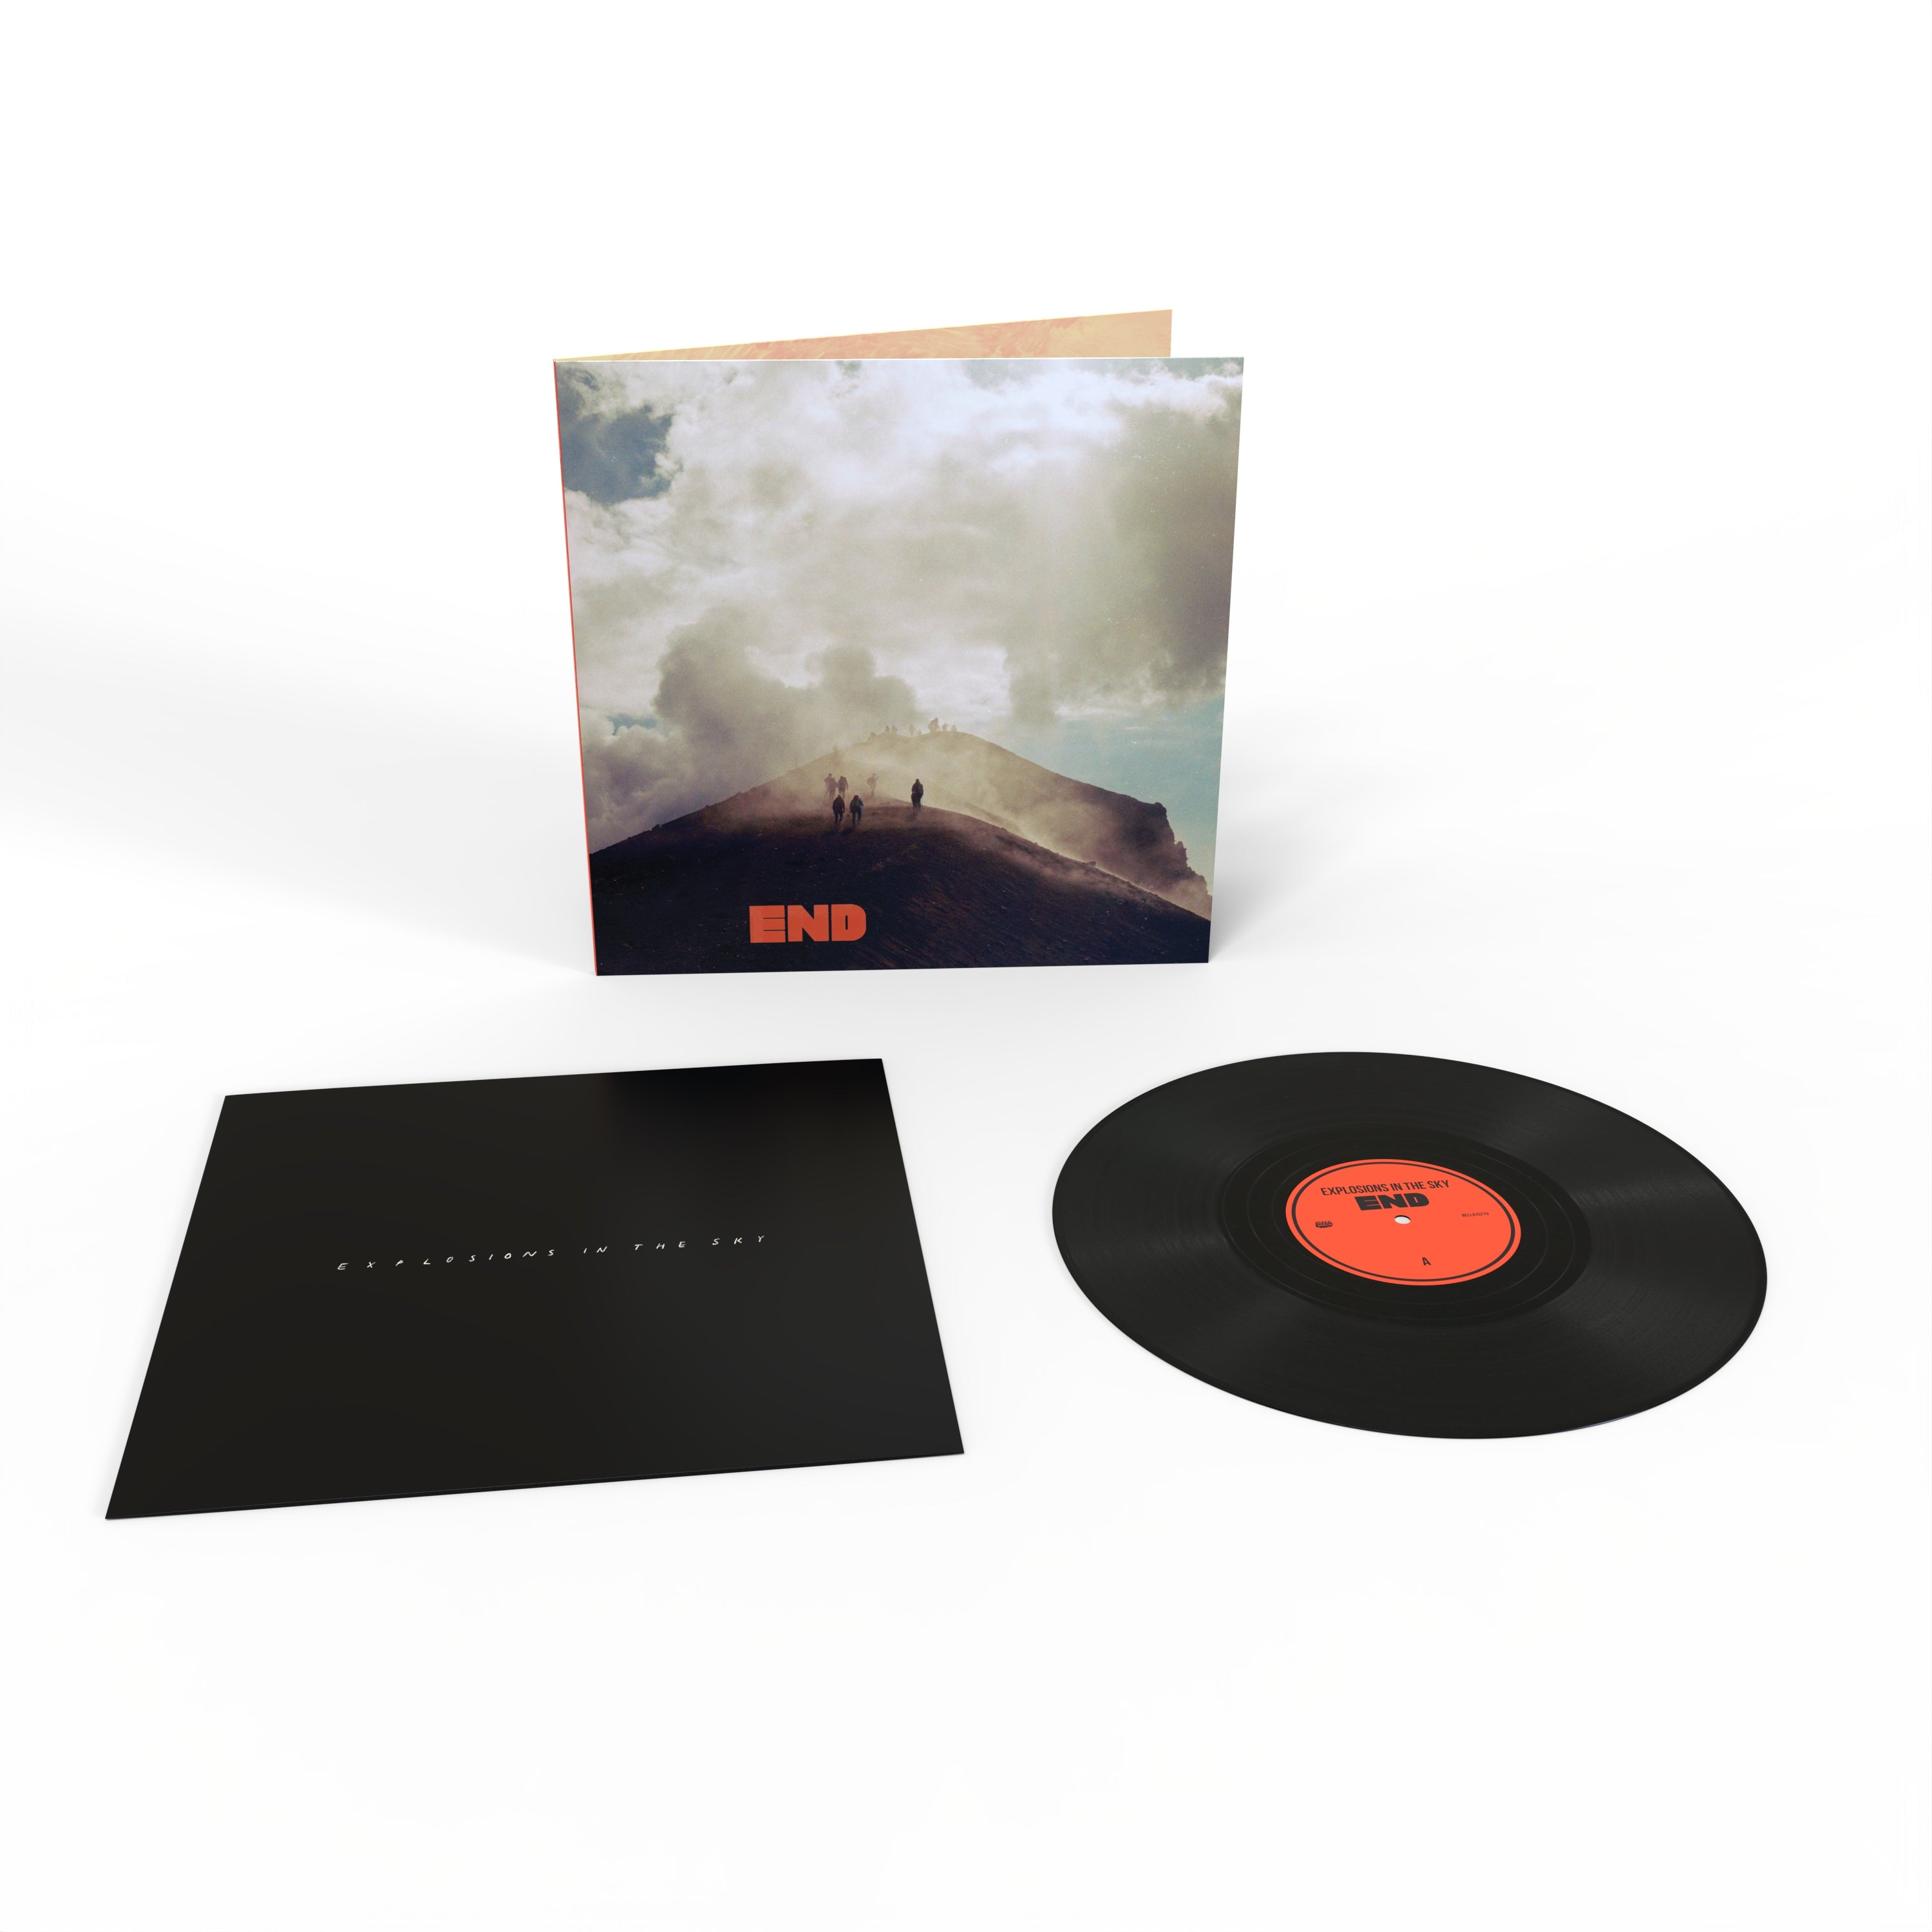 Explosions In The Sky - End: Vinyl LP